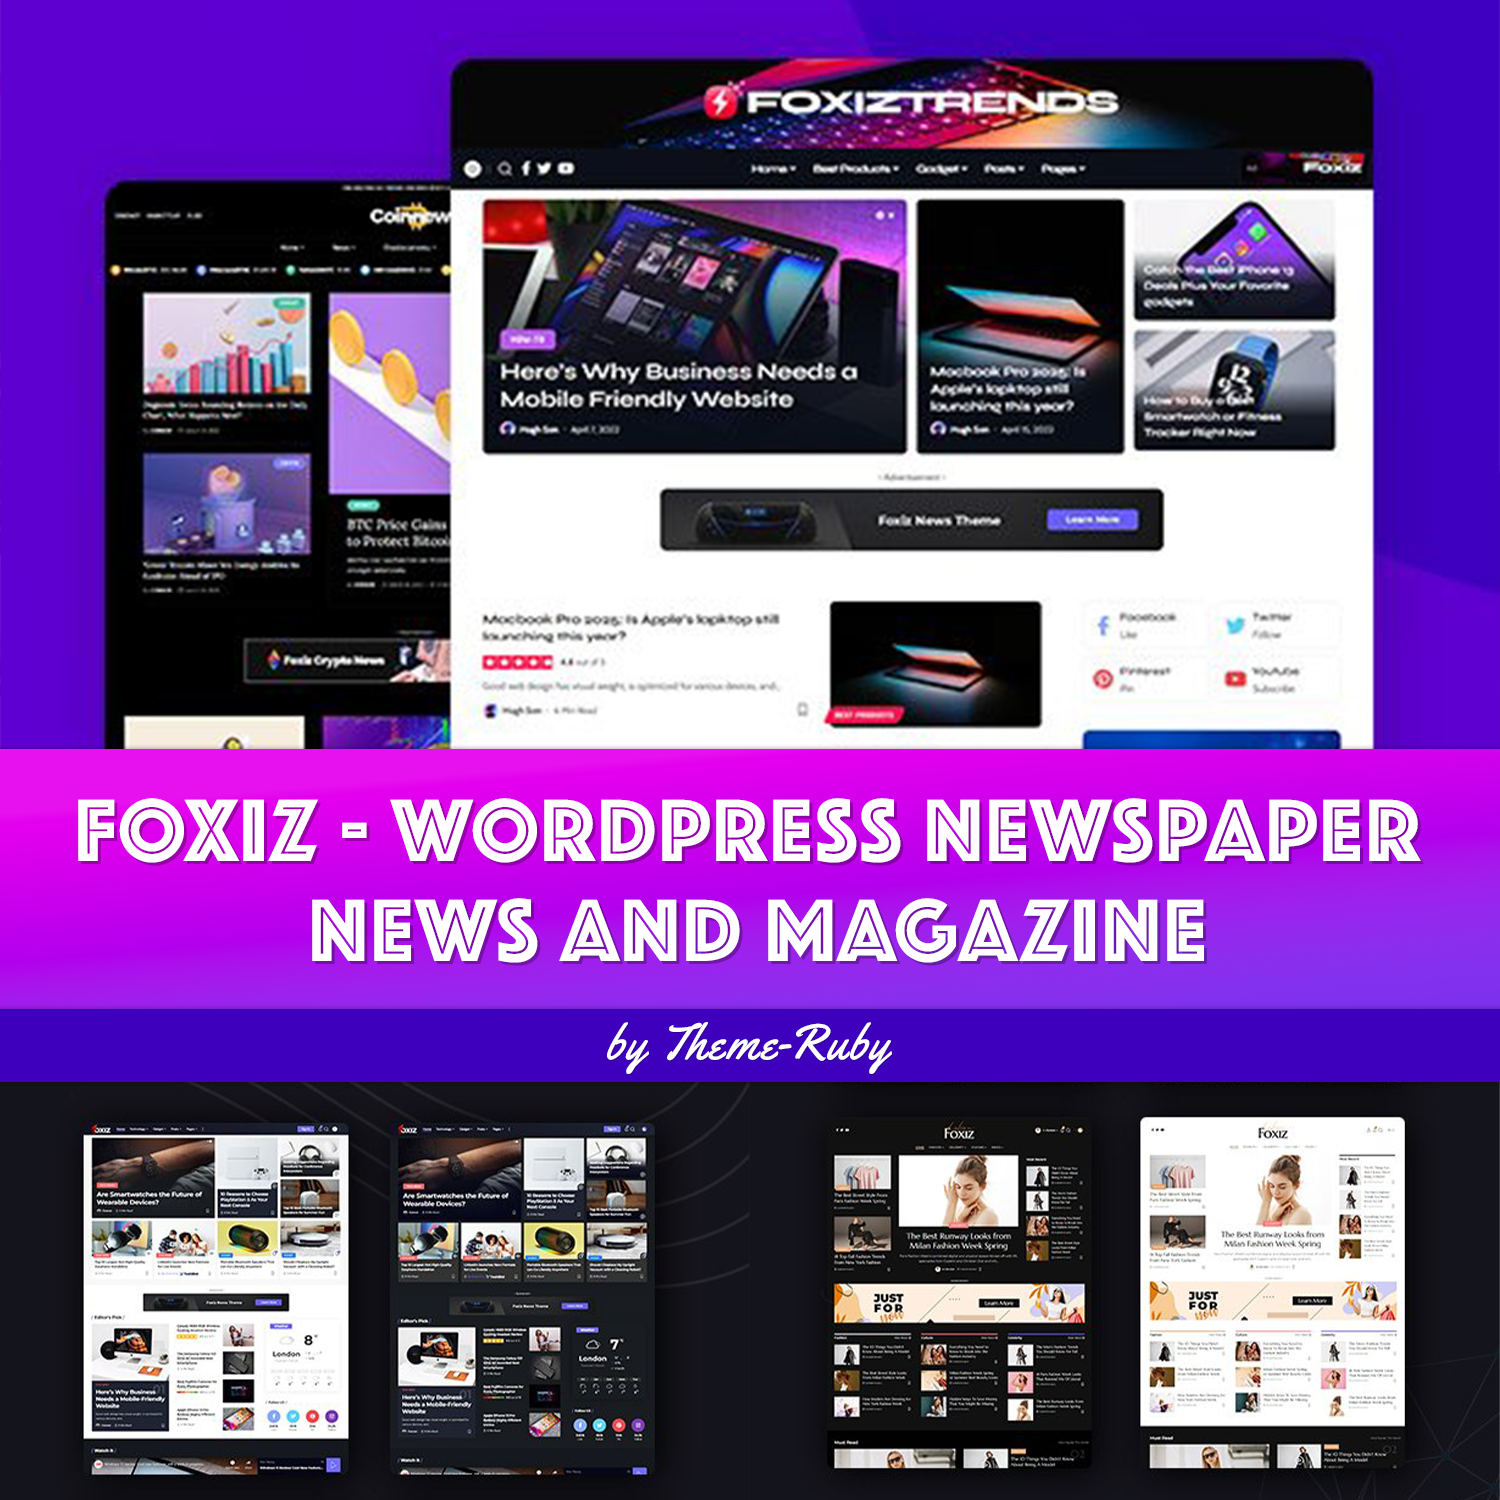 Preview foxiz wordpress newspaper news and magazine.